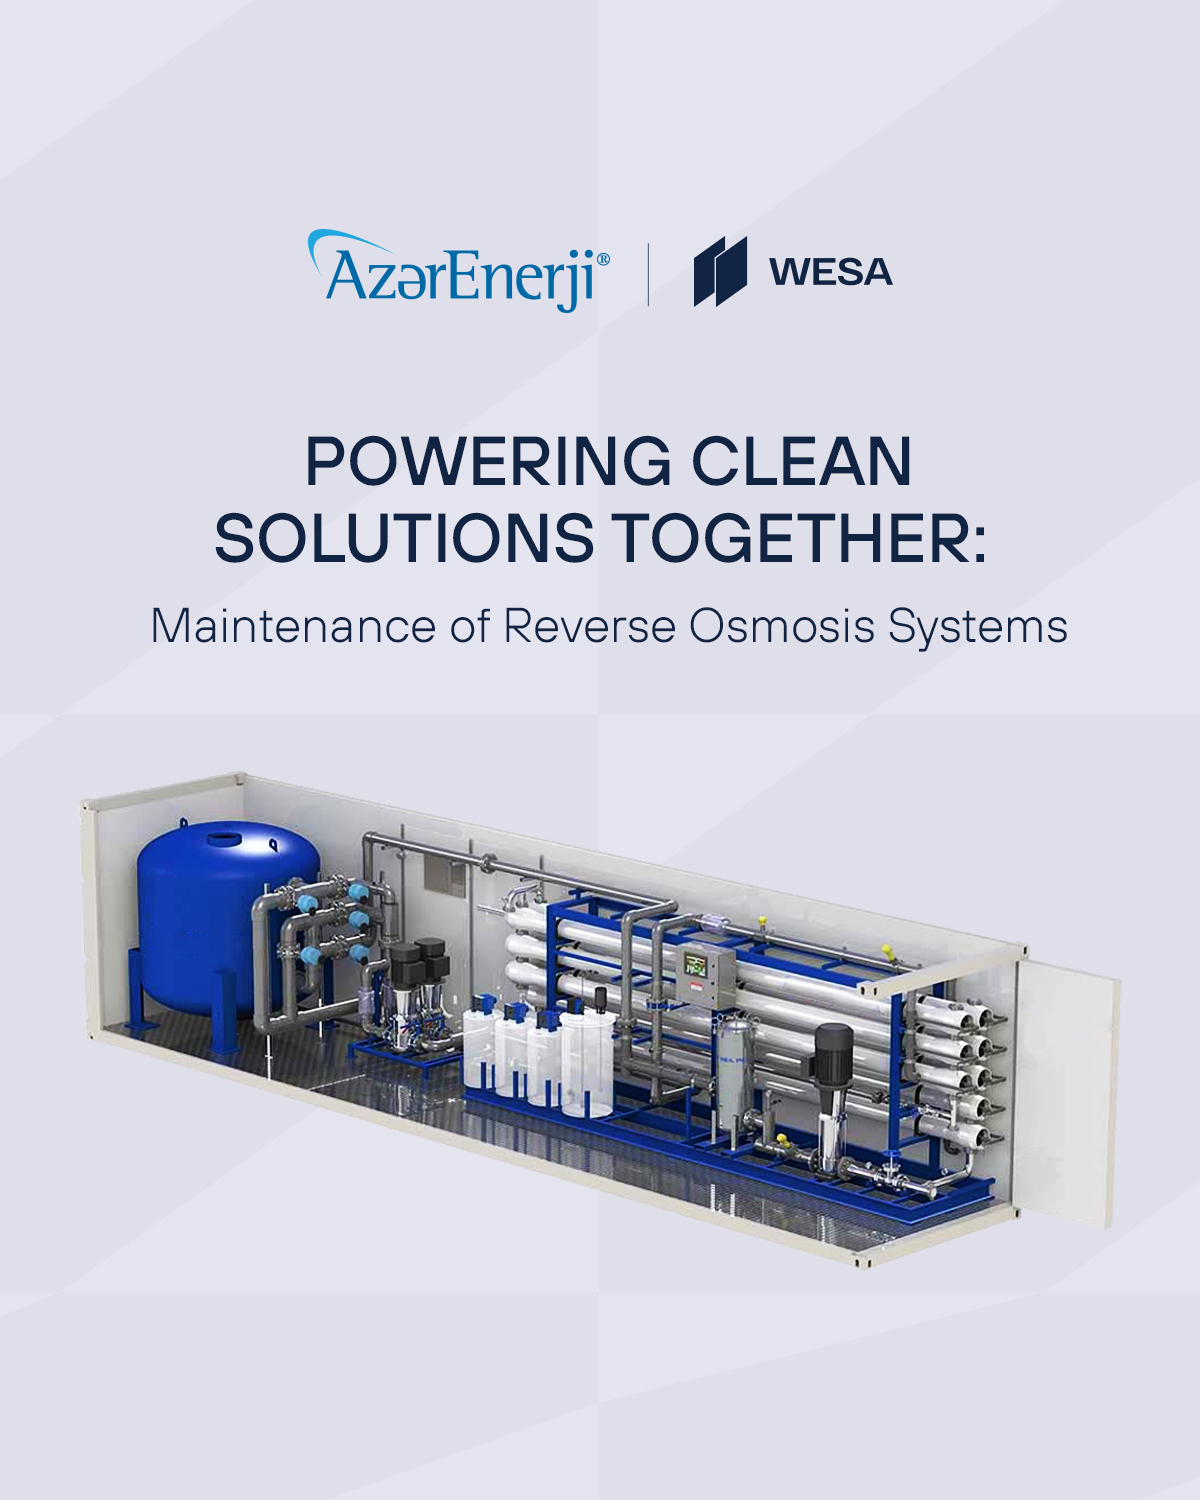 Powering clean solutions together | Azerenerji & WESA